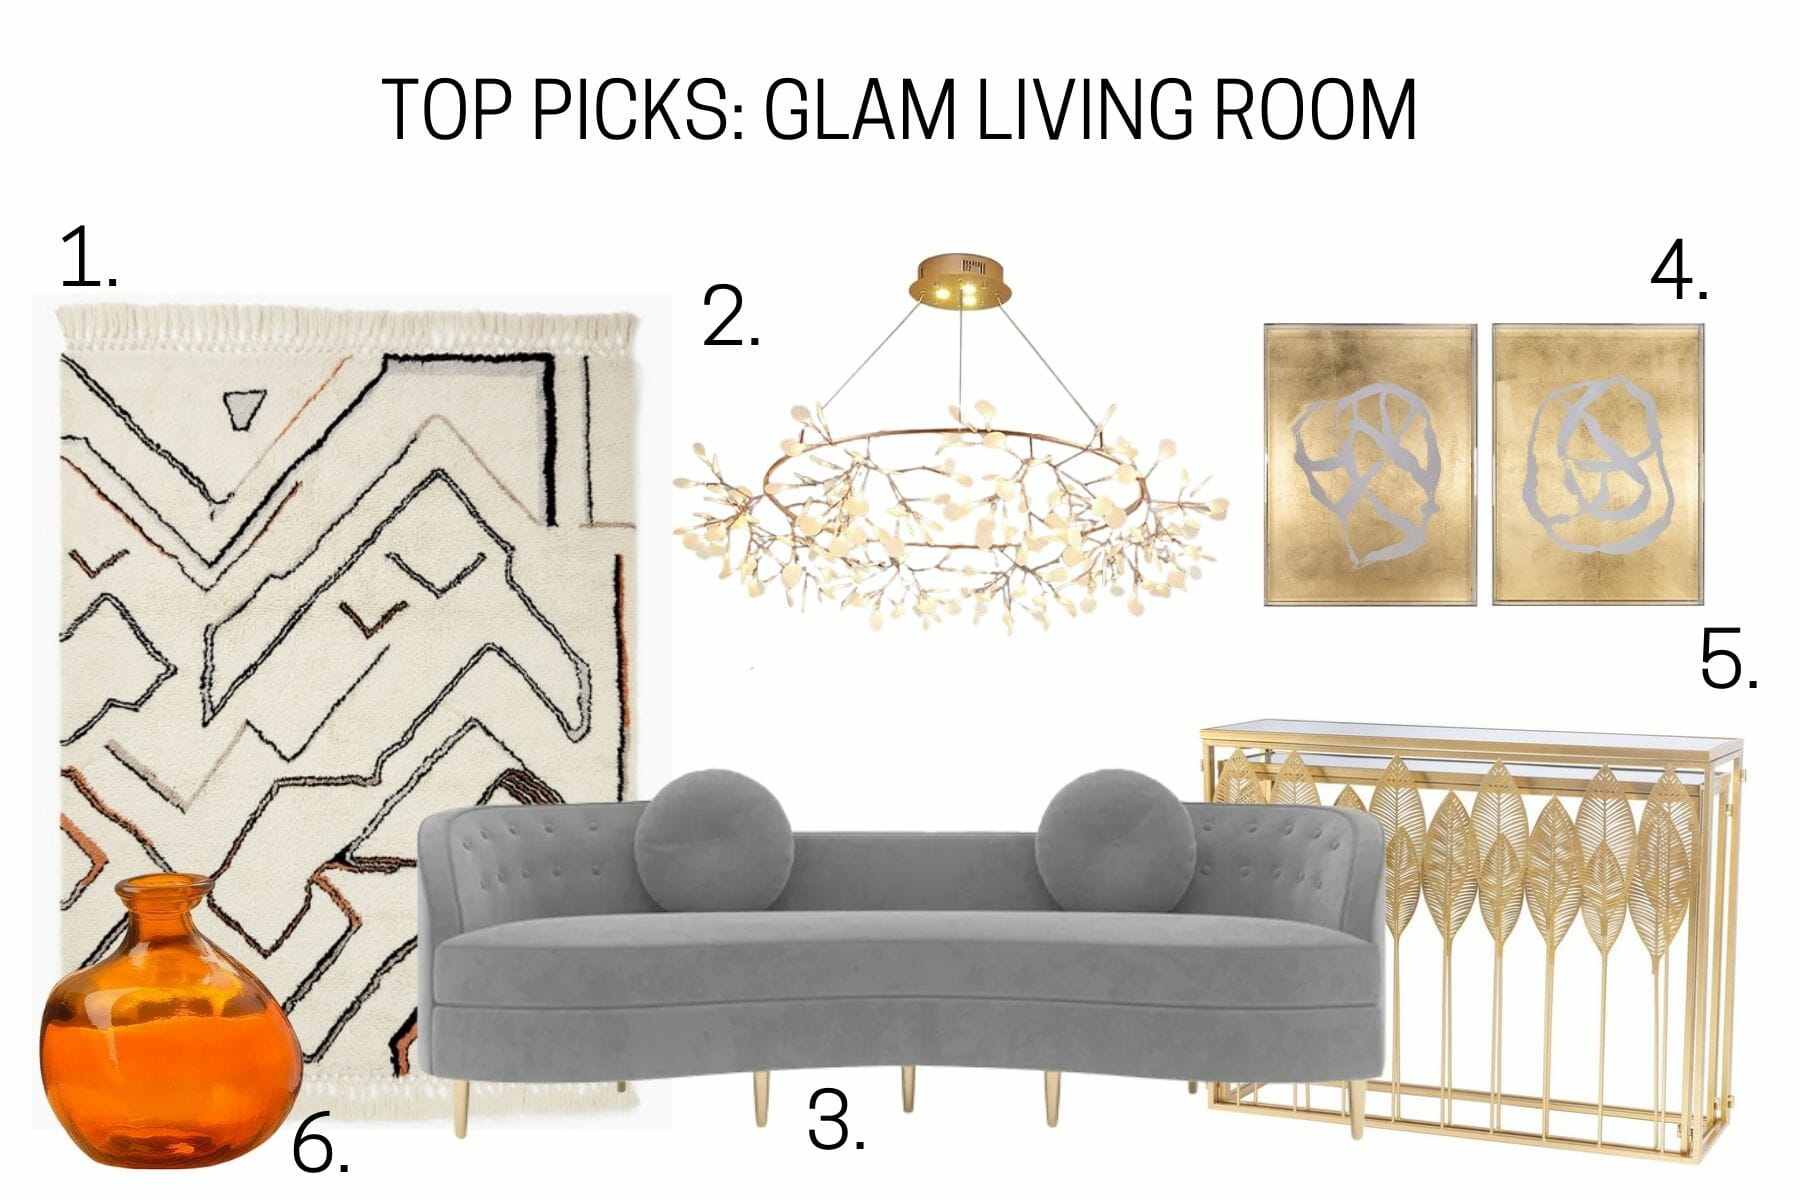 Glam living room top picks